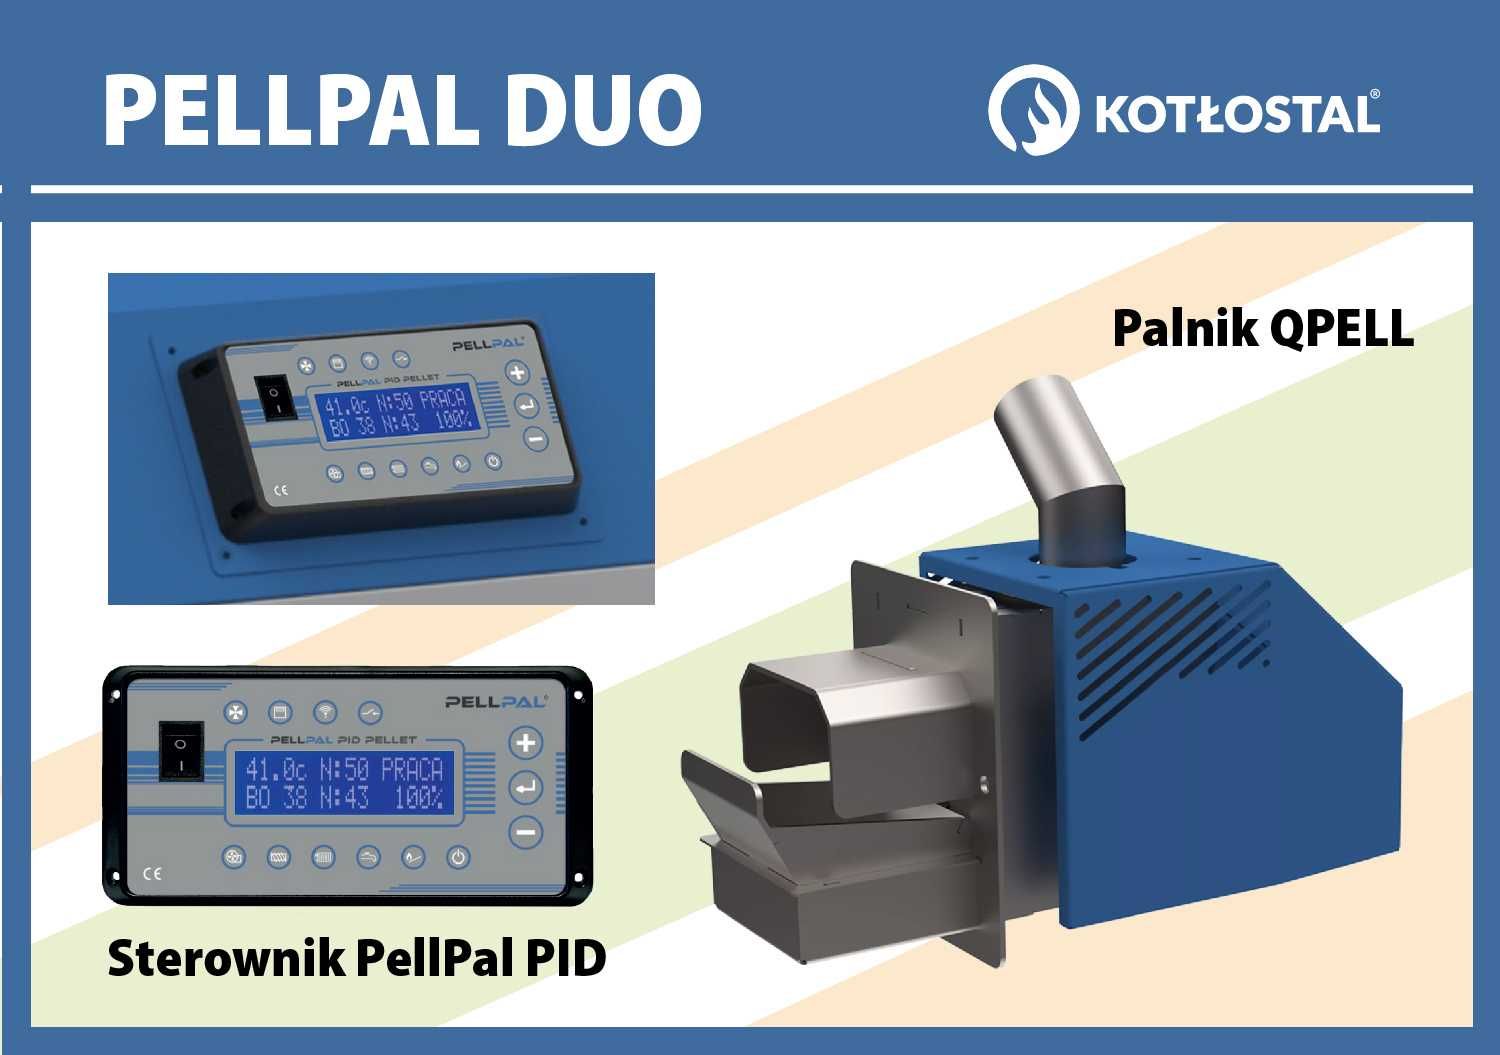 Kocioł na pellet PELLPAL DUO o mocy 24 kW - EcoDesign - sterownik LCD